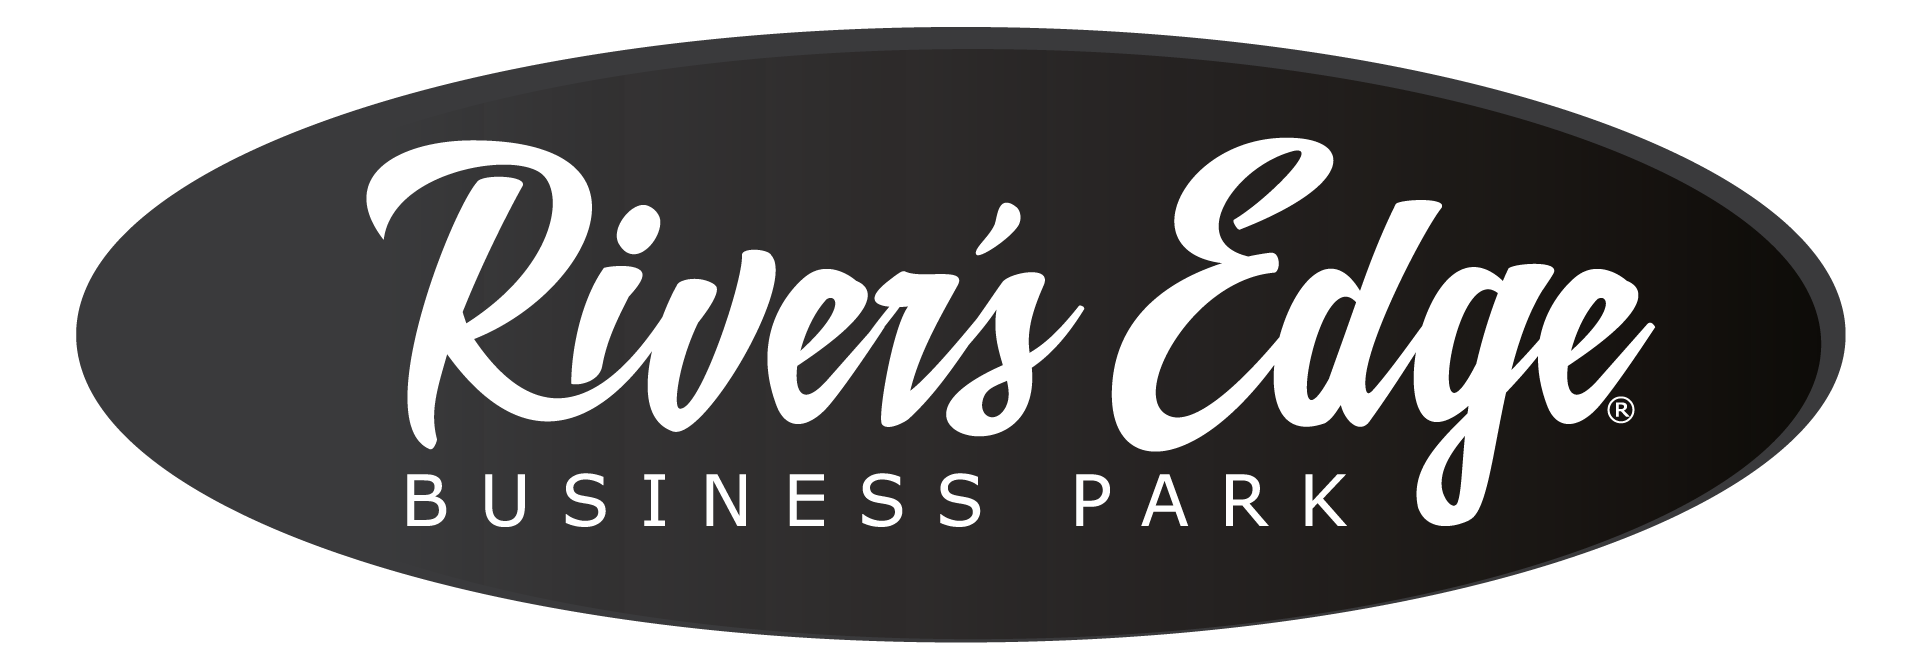 River's Edge Business Park logo